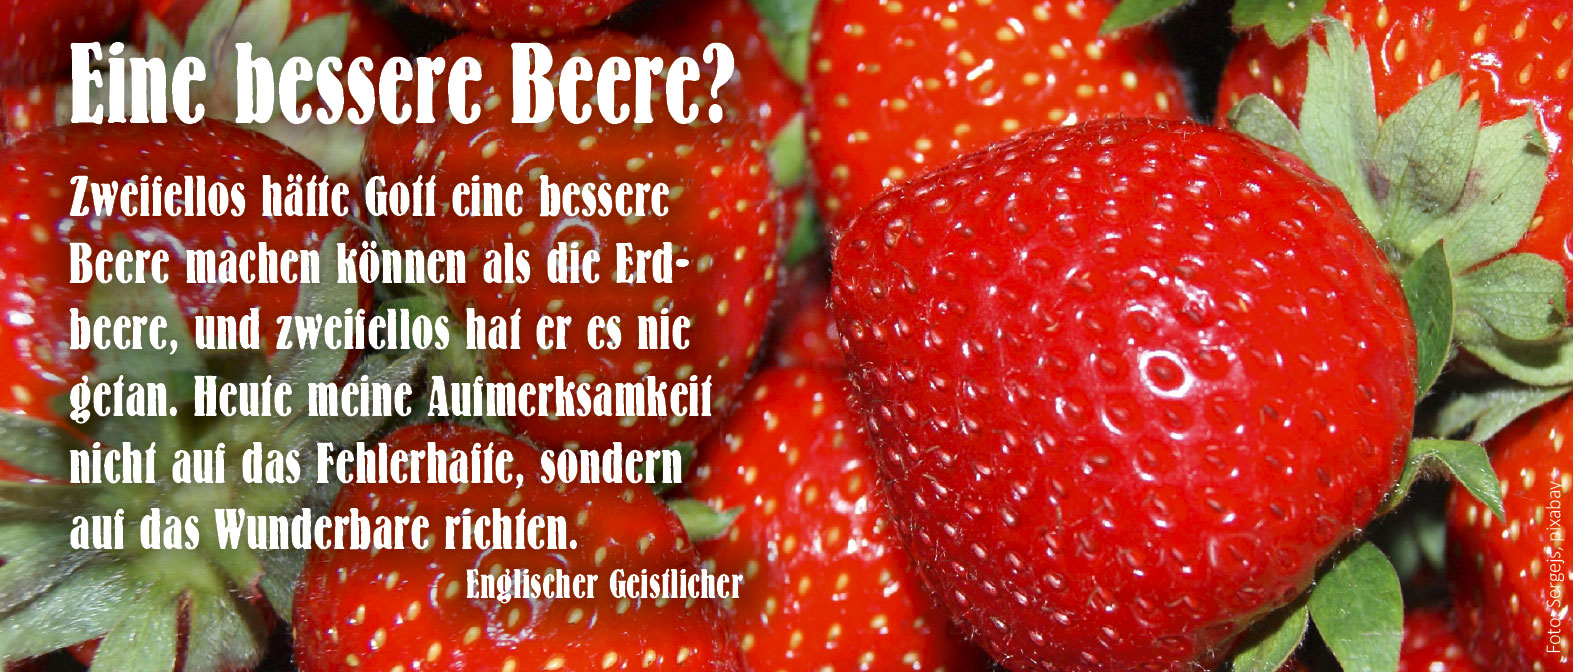 Eine bessere Beere? (Foto Erdbeeren: Sergejs, pixabay)